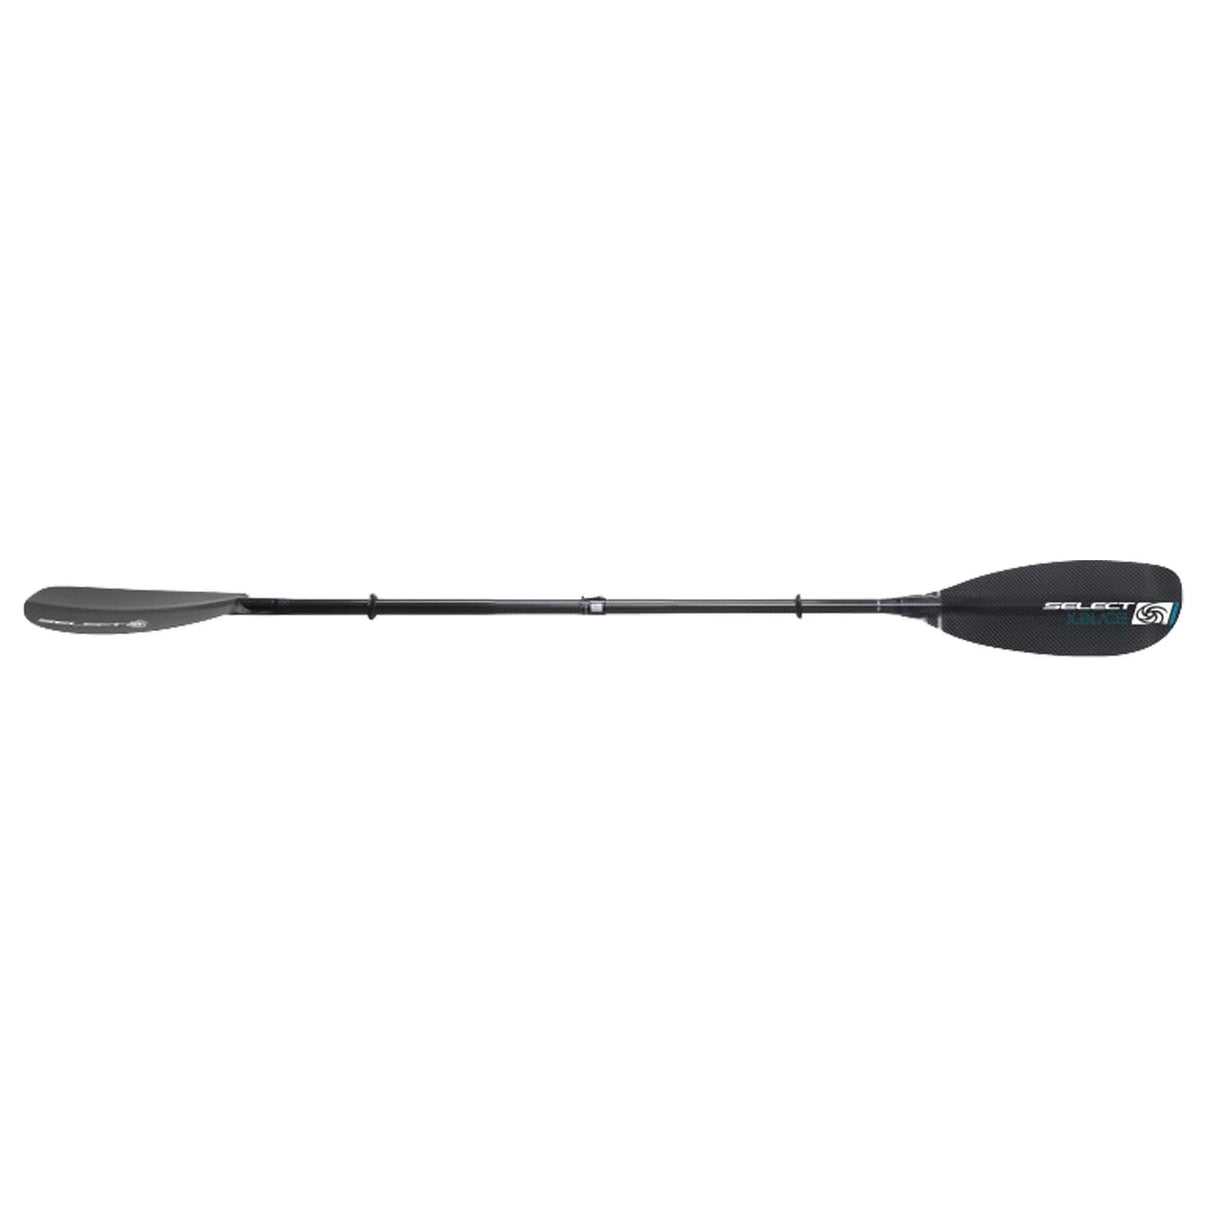 Select X.Blade Touring Paddle - Bent Shaft